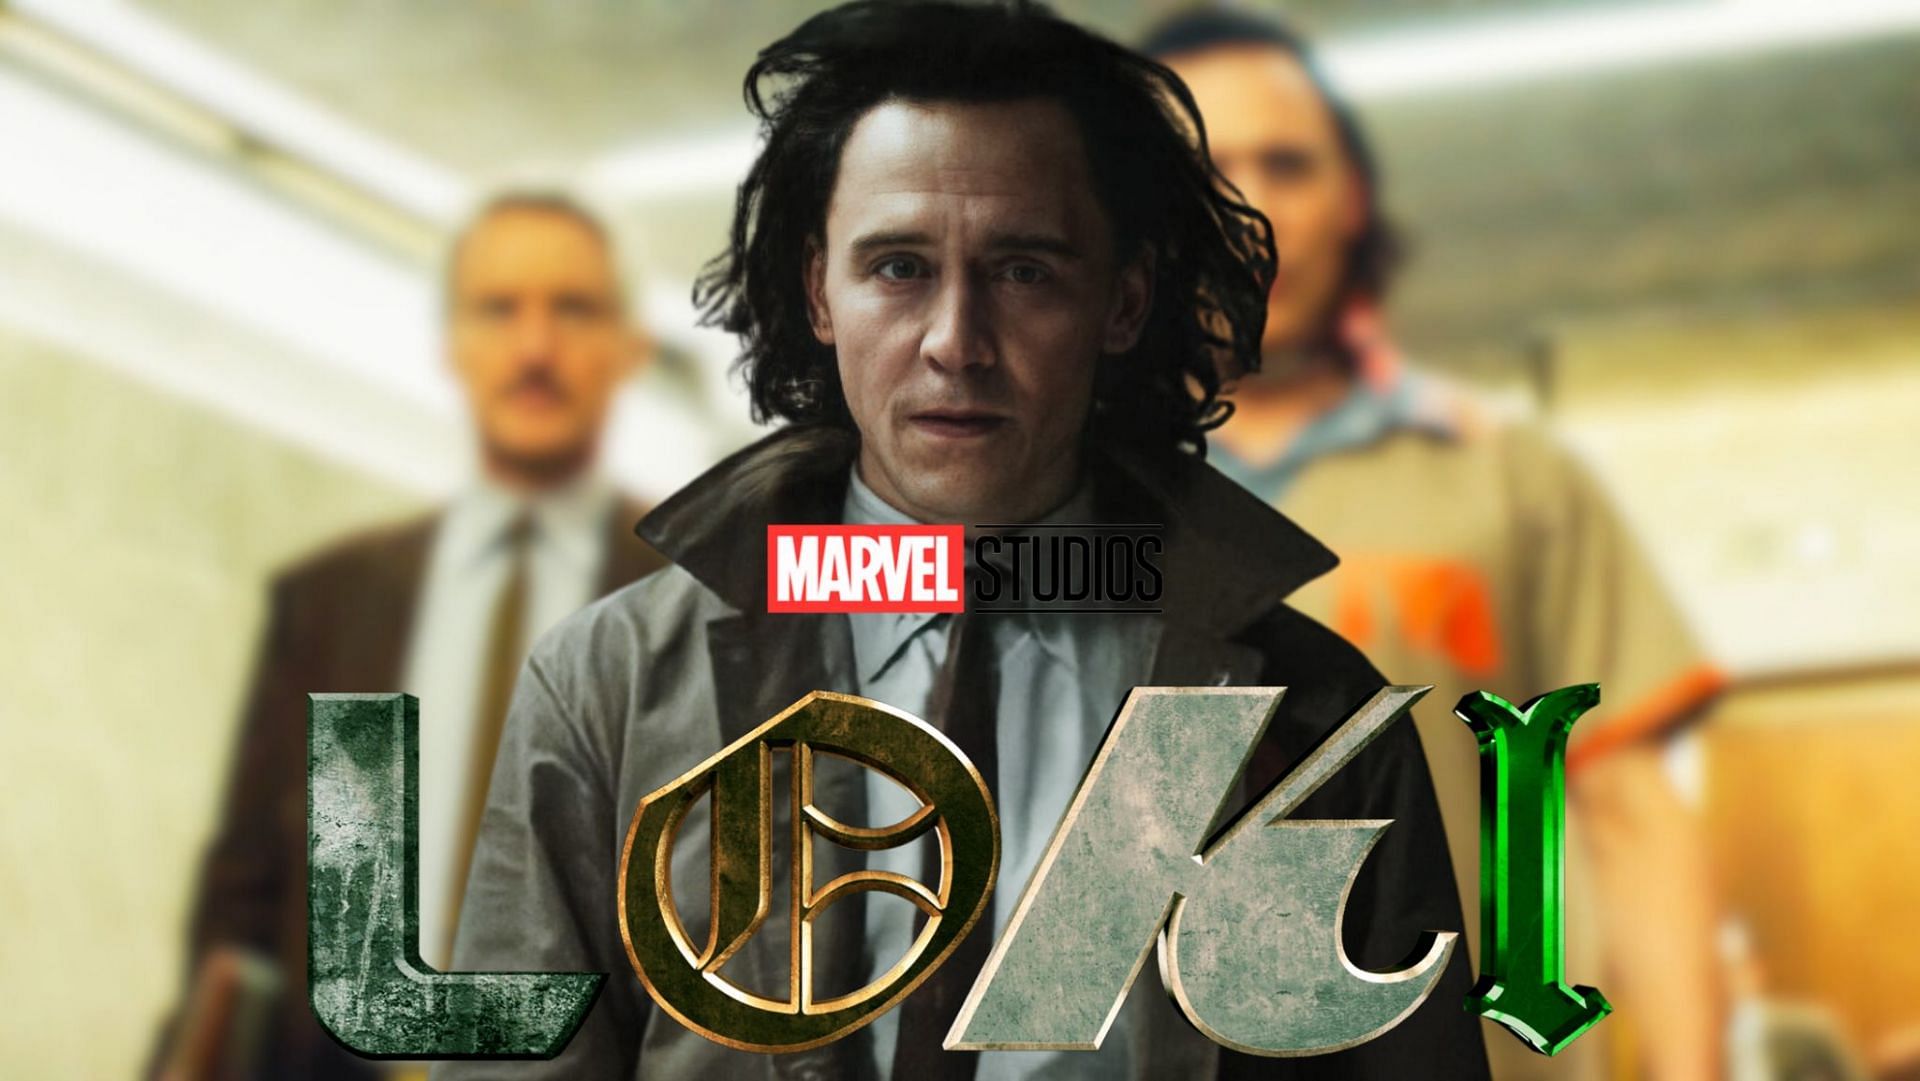 Rafael Casal To Star In Marvel's “Loki” Season 2 – What's On Disney Plus